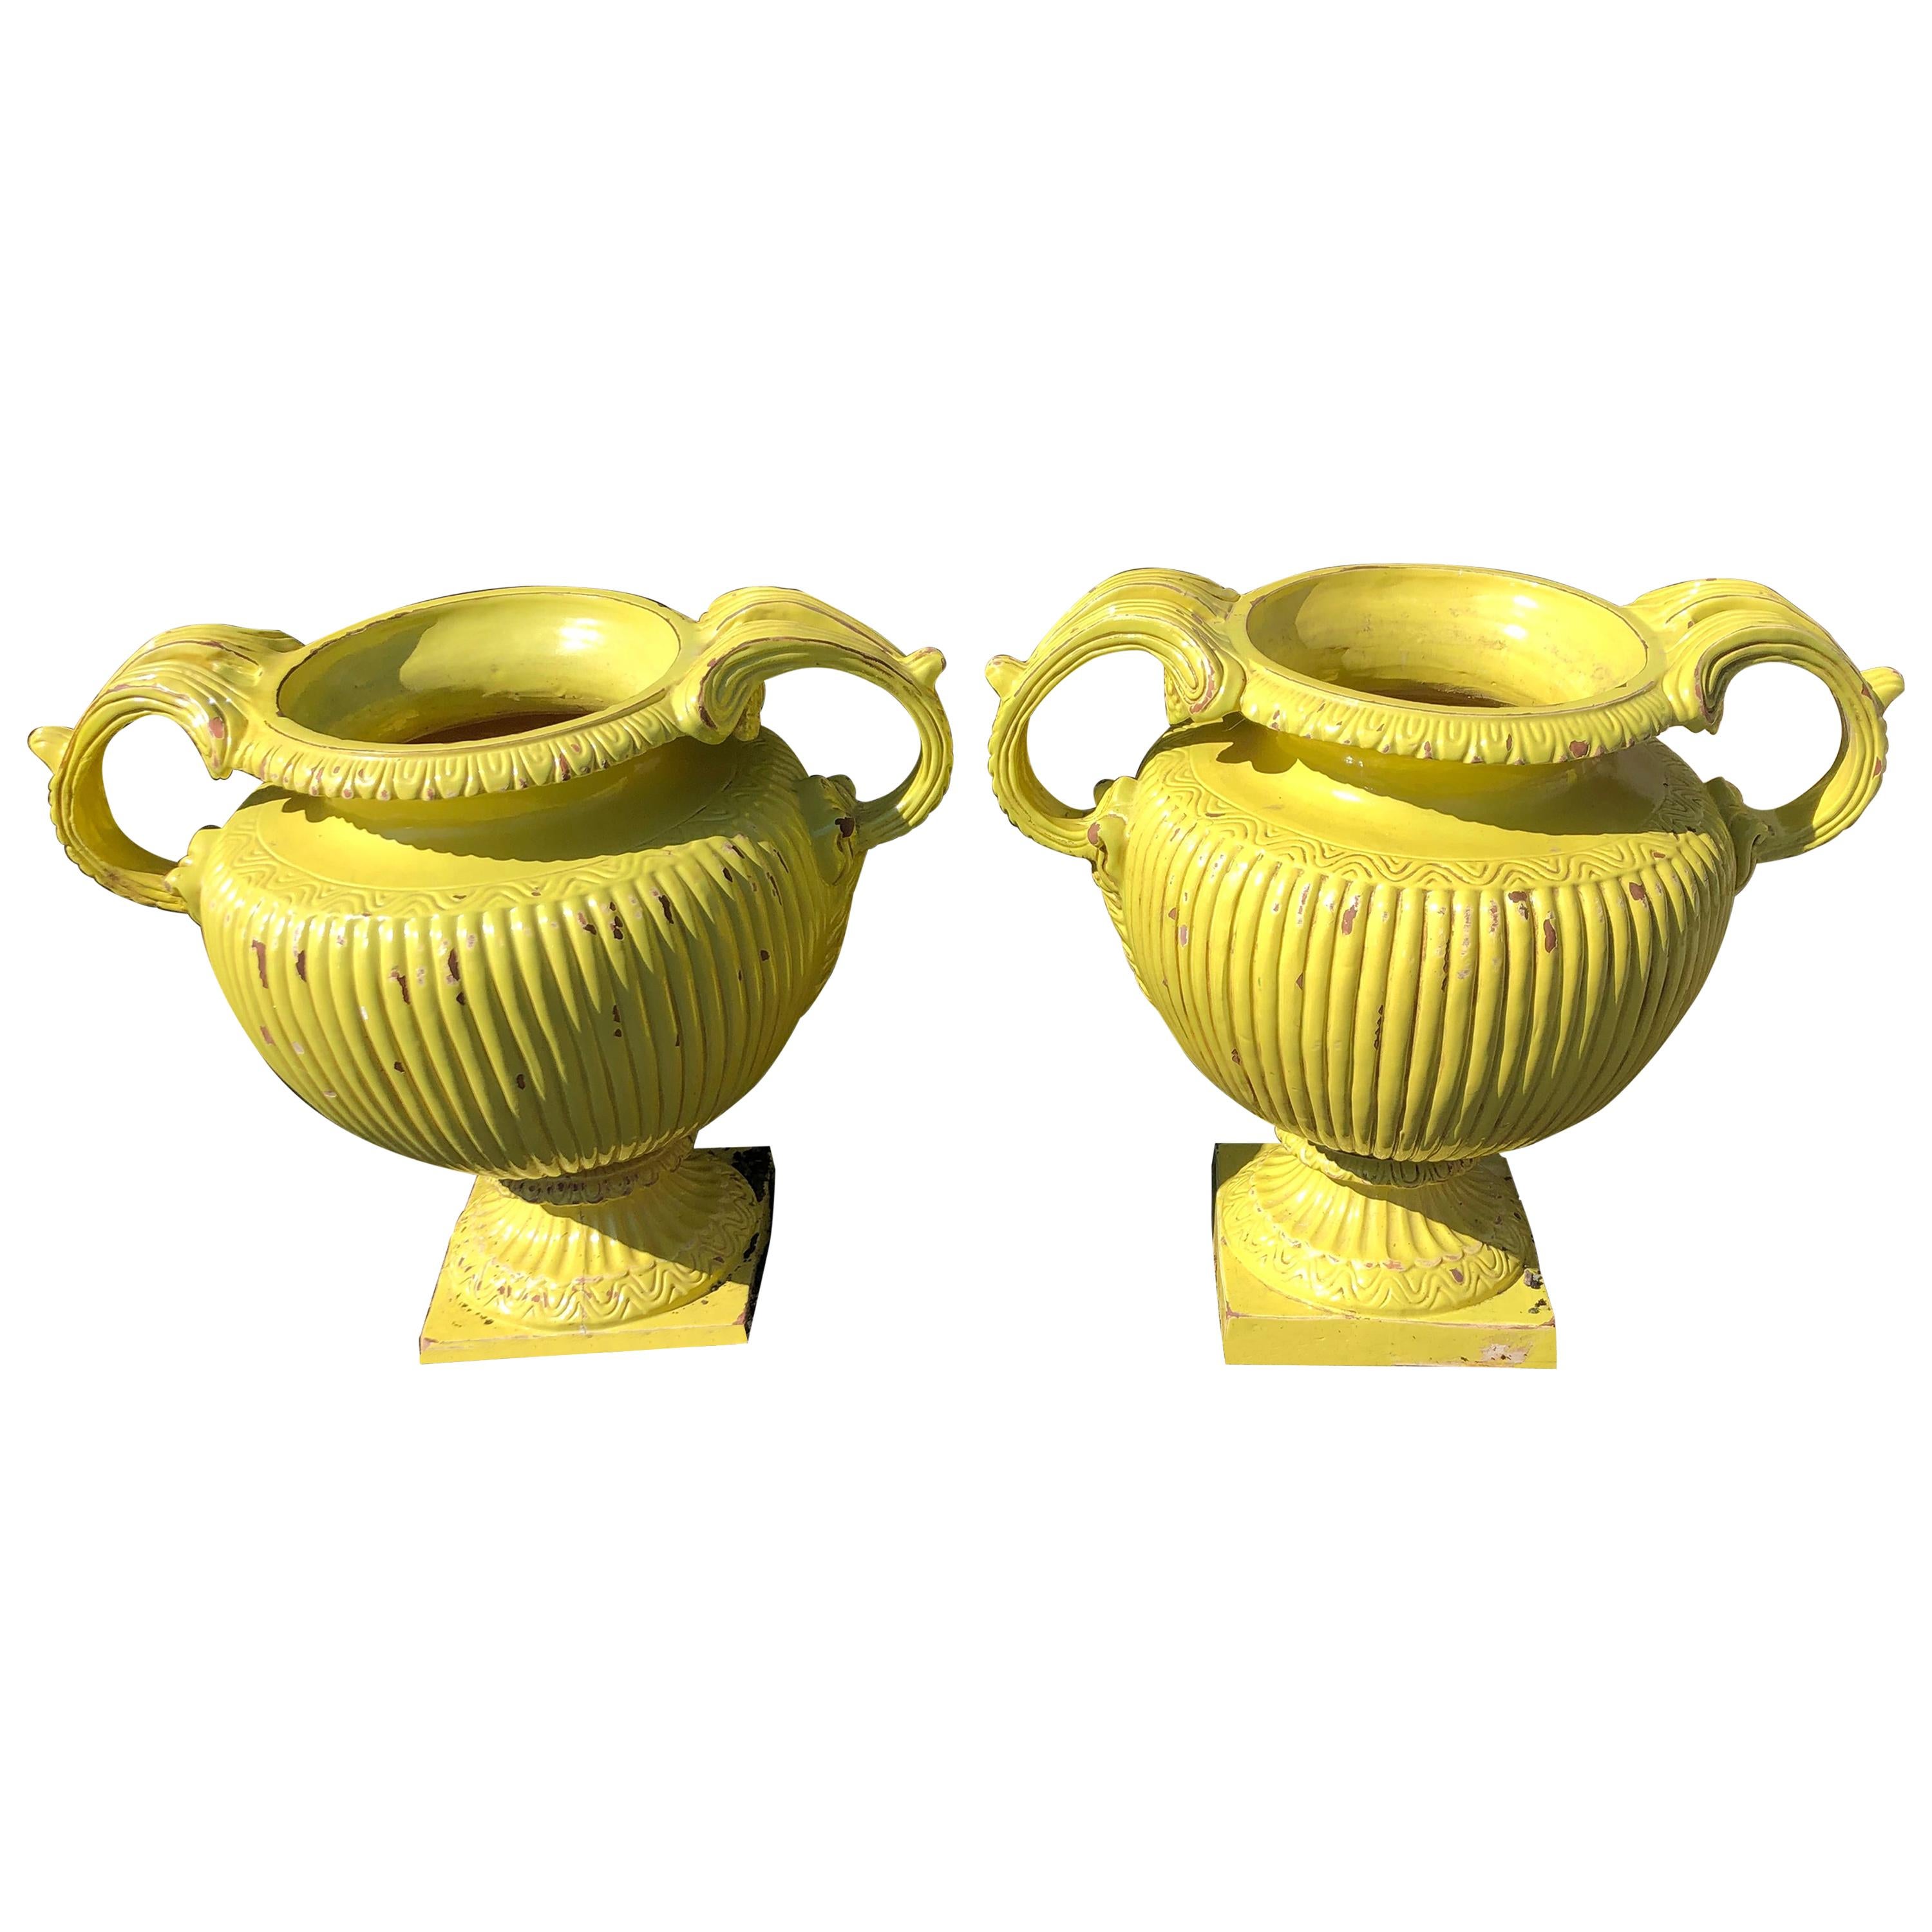 Sensational Pair of Bright Yellow Ceramic Vintage Handled Planter Jardinières